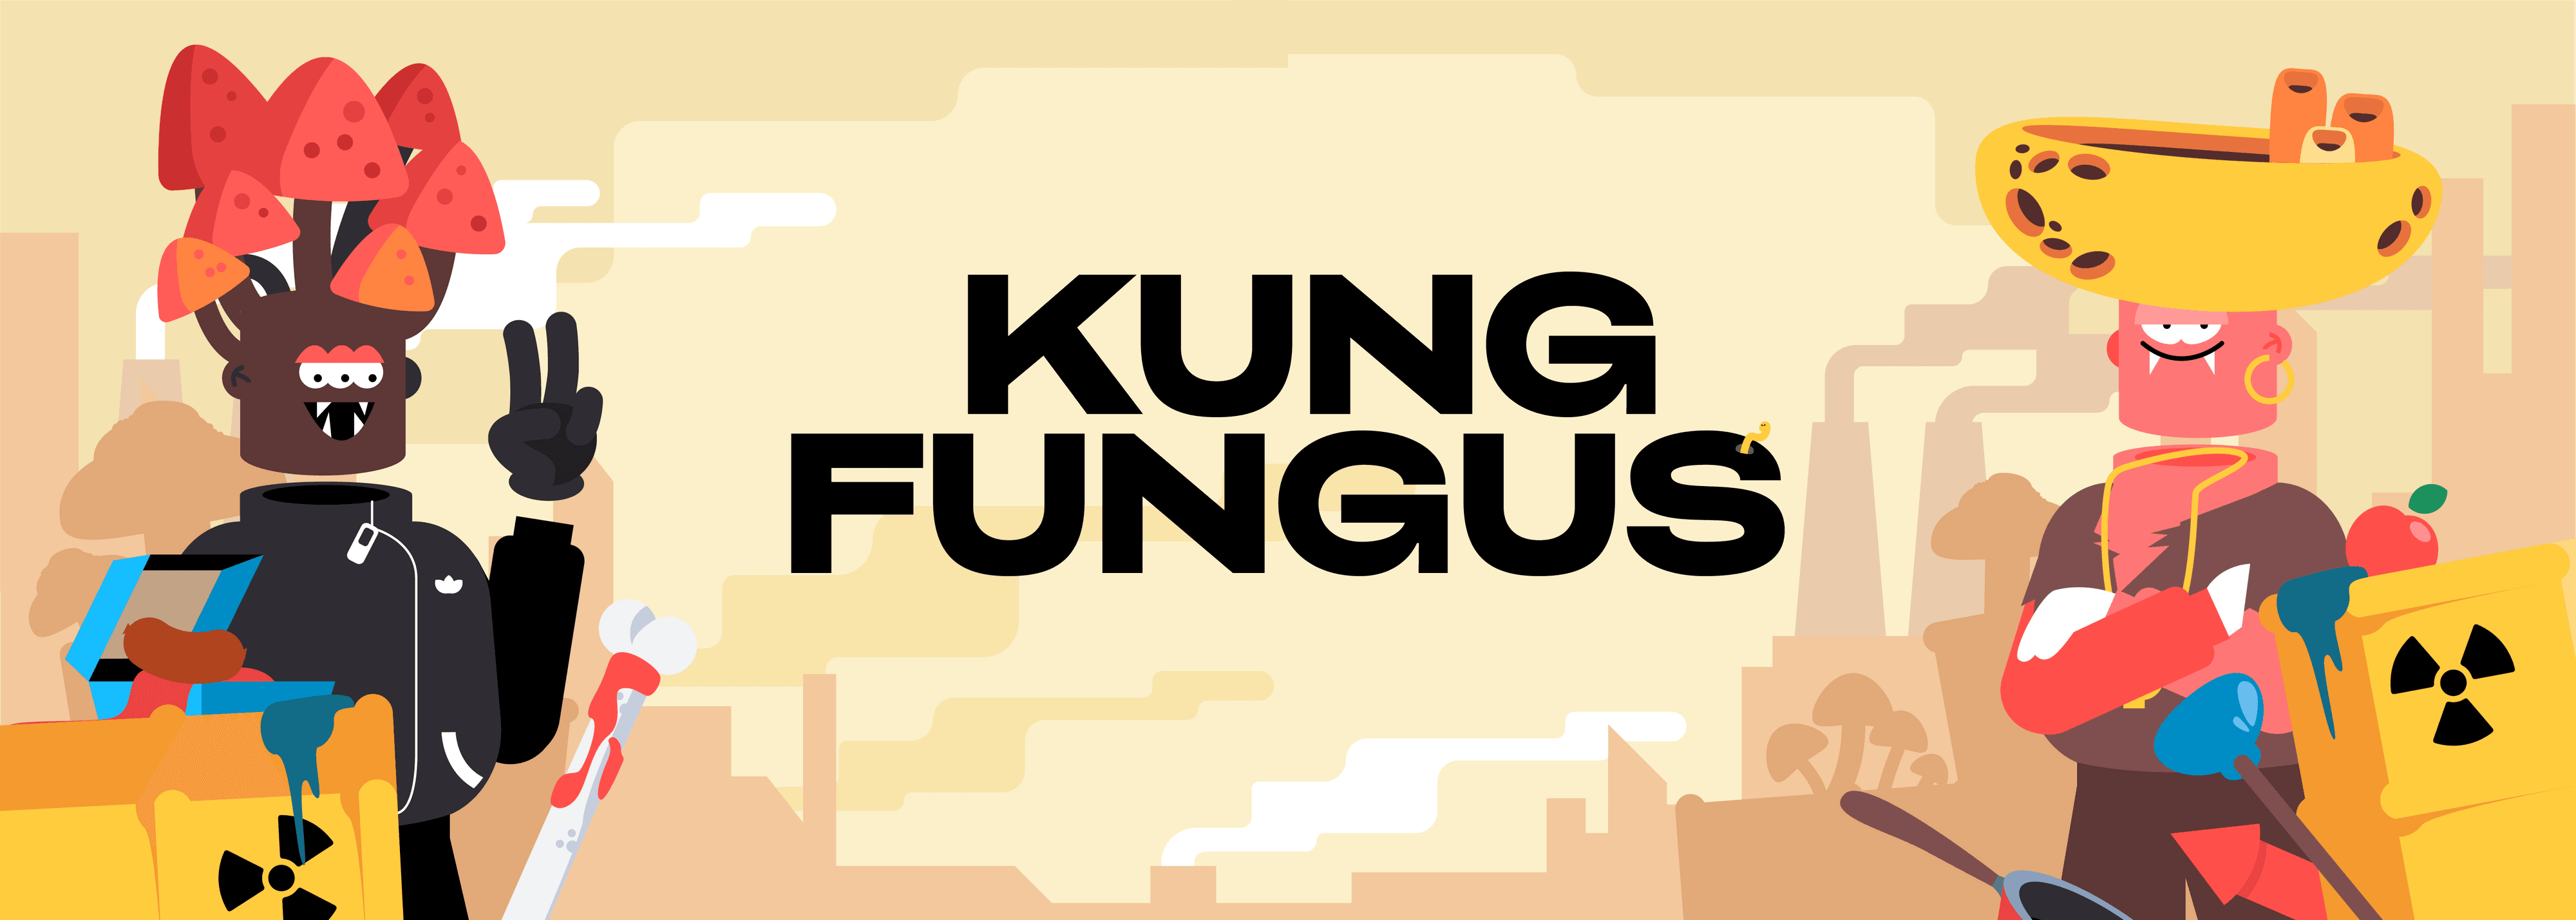 KungFungusOfficial 横幅